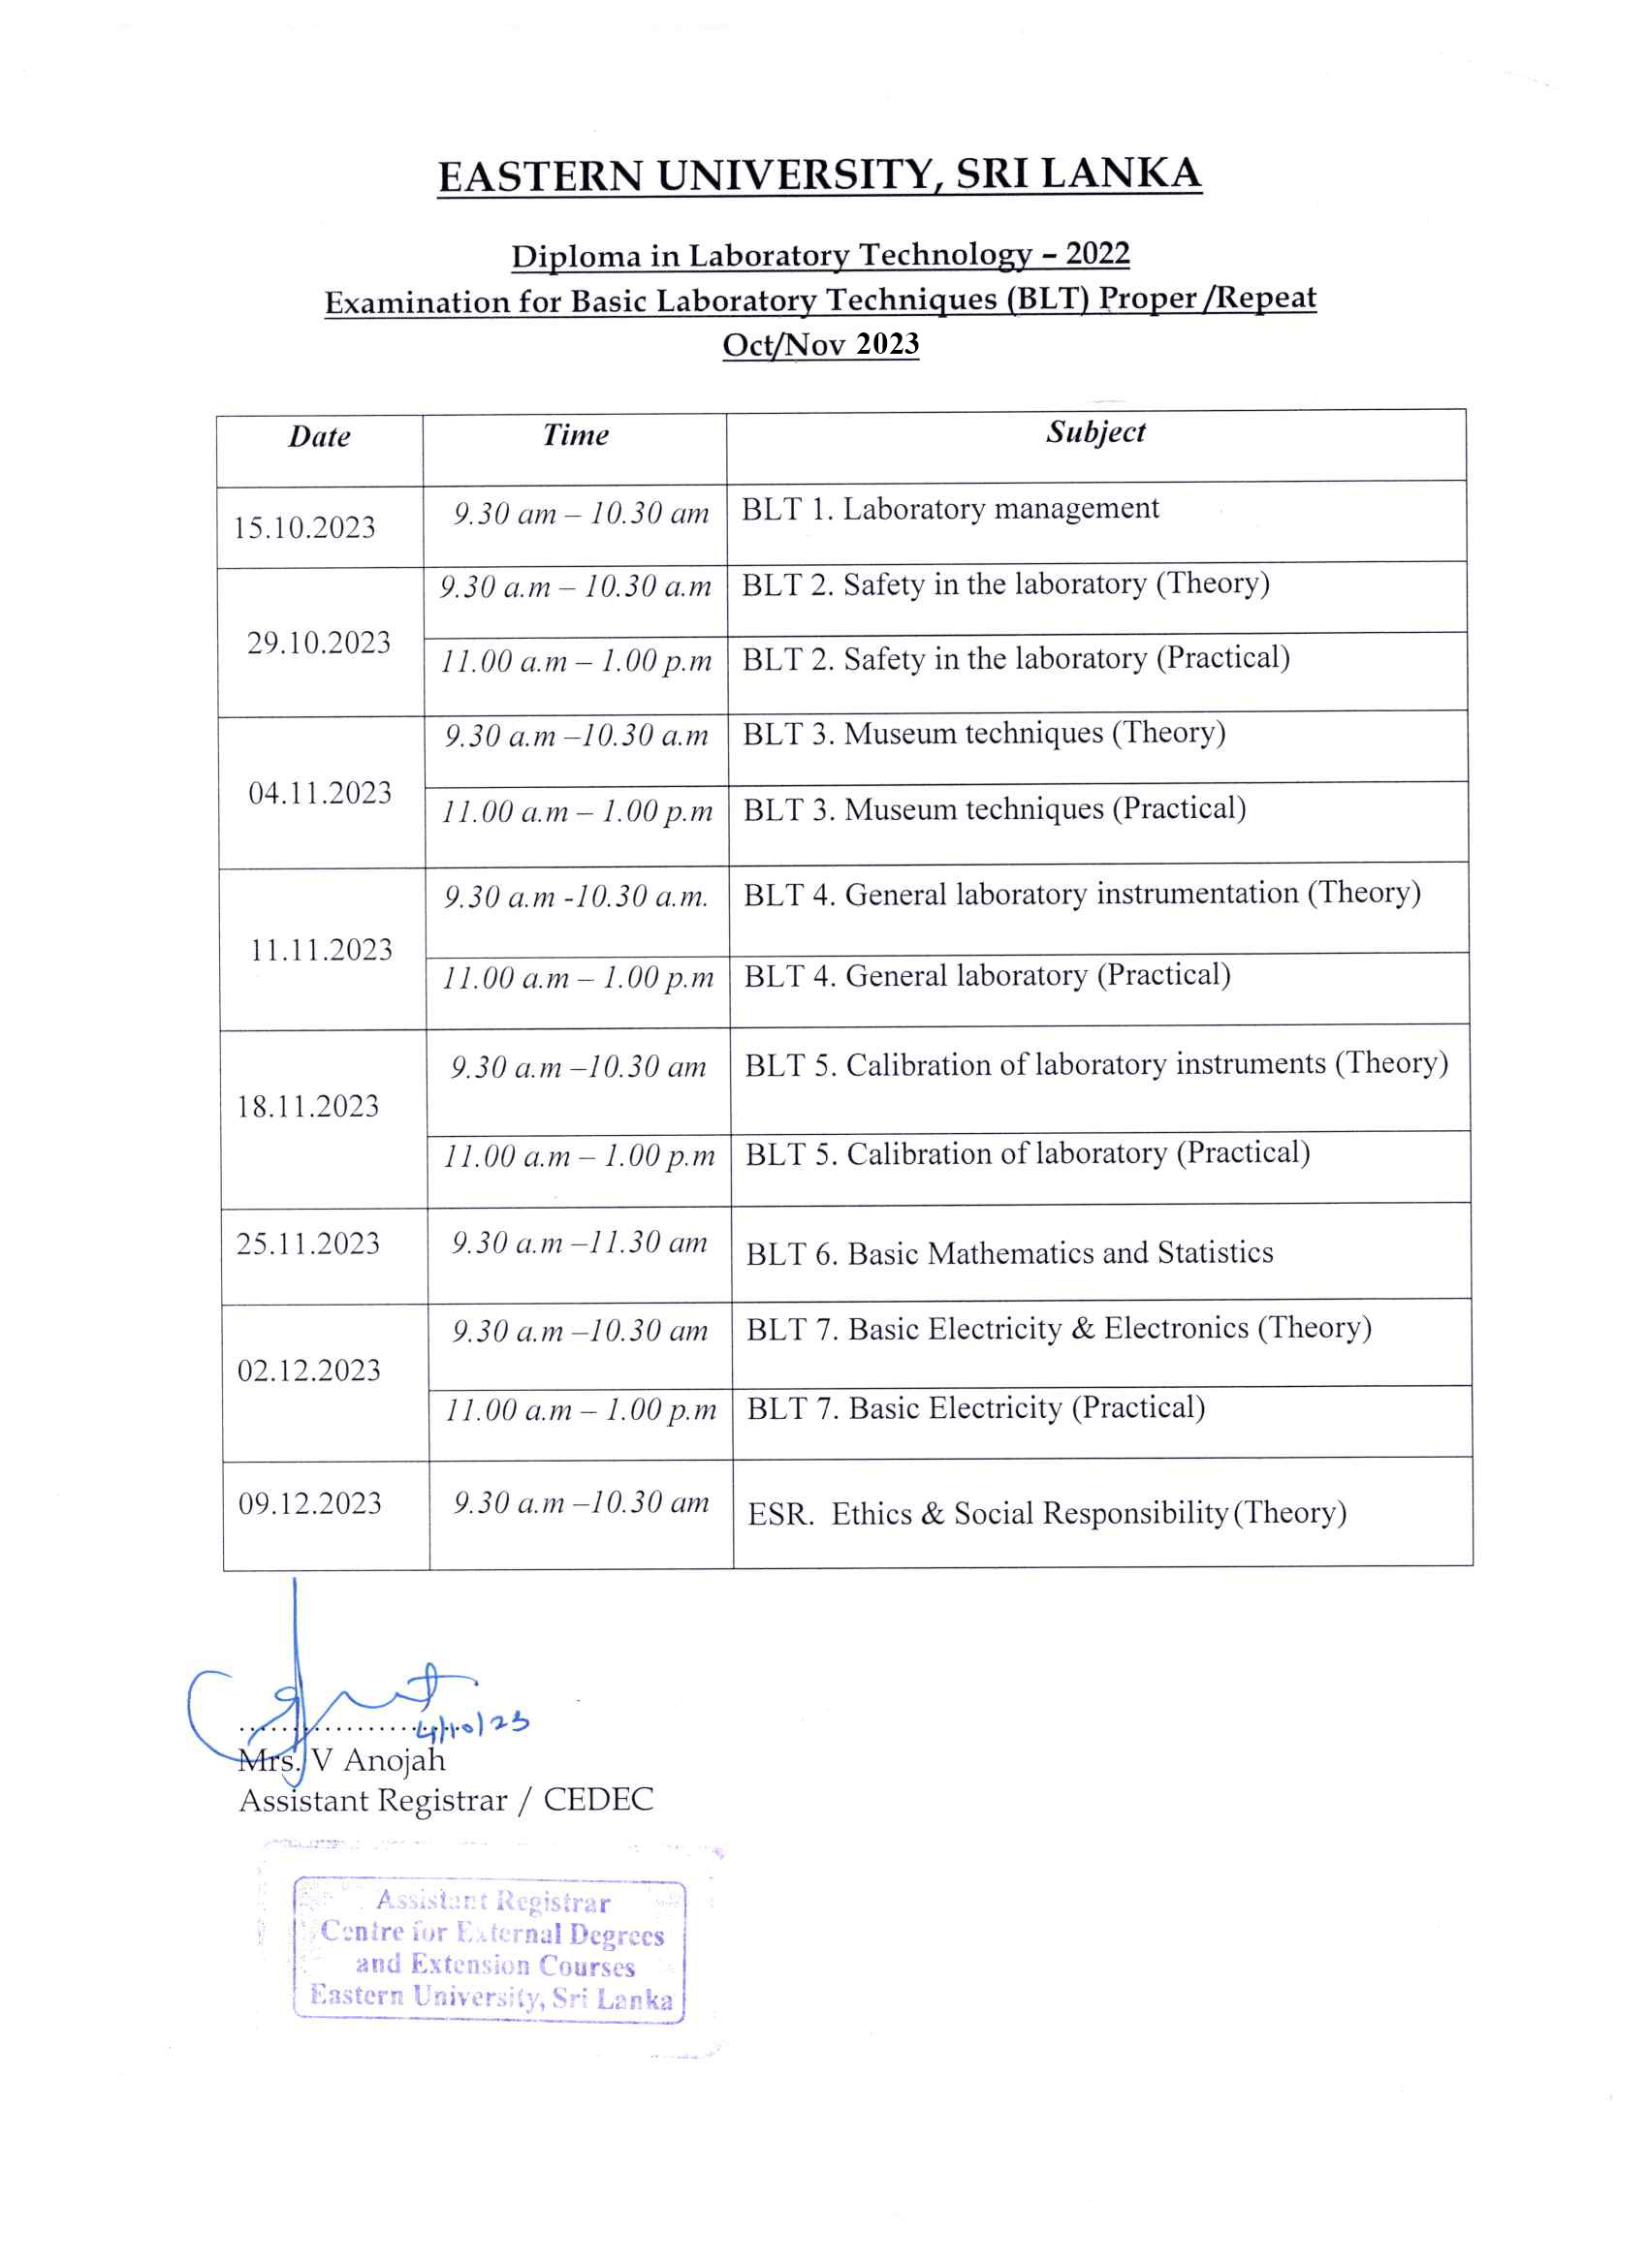 DLT Exam Timetable - BLT